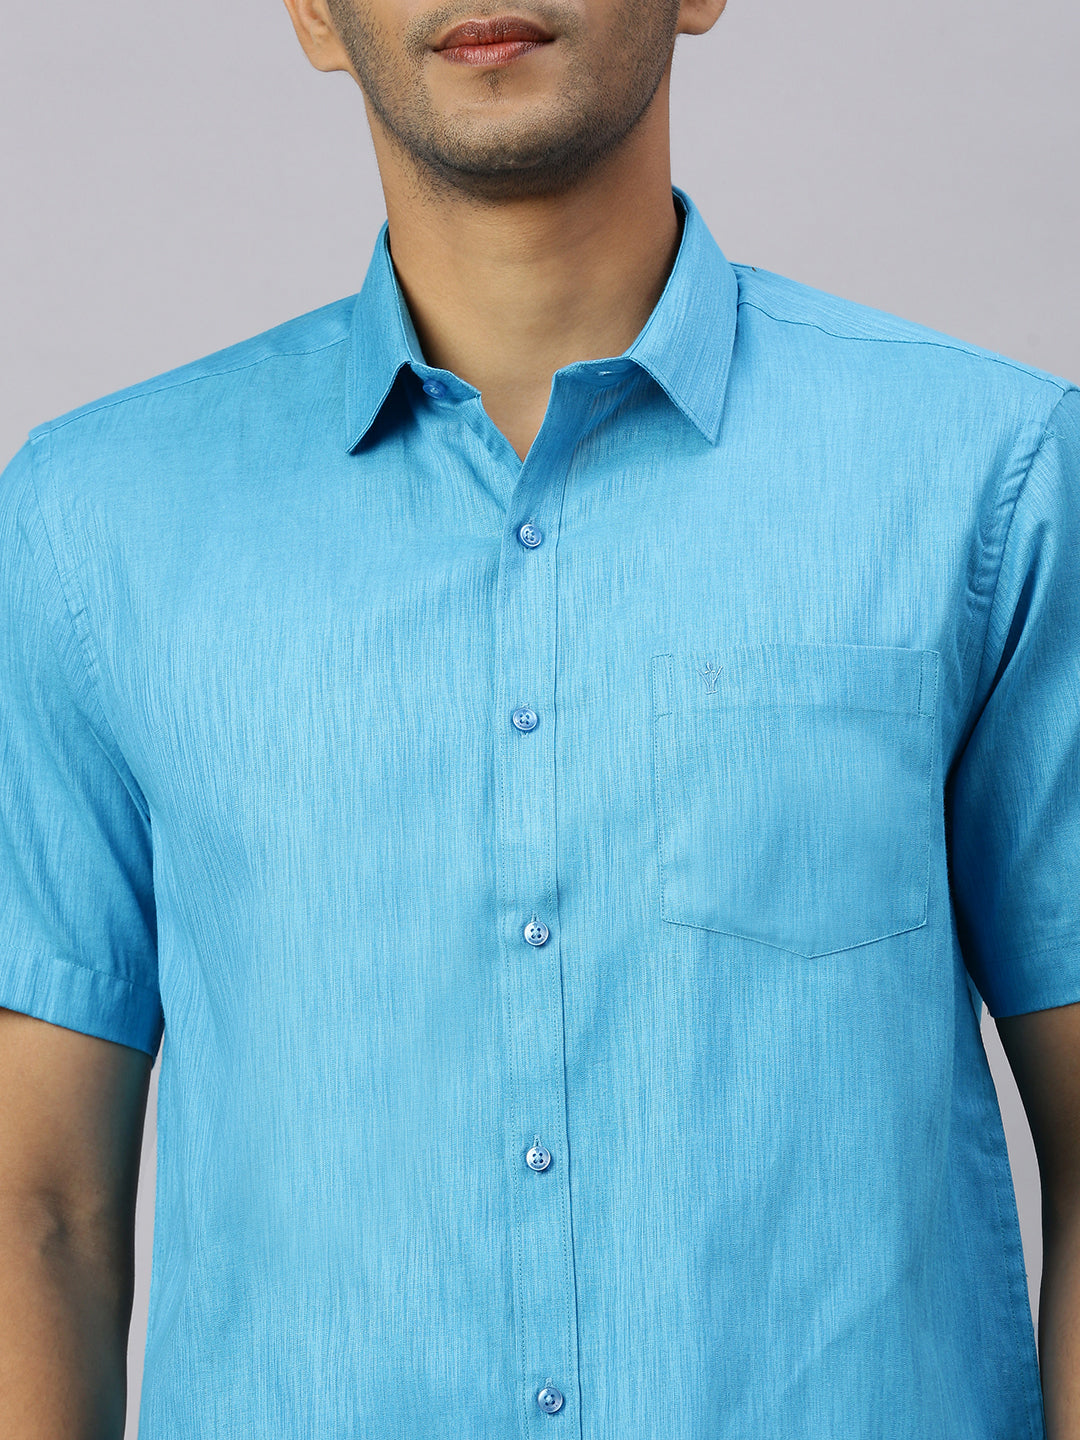 Mens Eastern Blue Matching Border Dhoti & Half Sleeves Shirt Set CV5